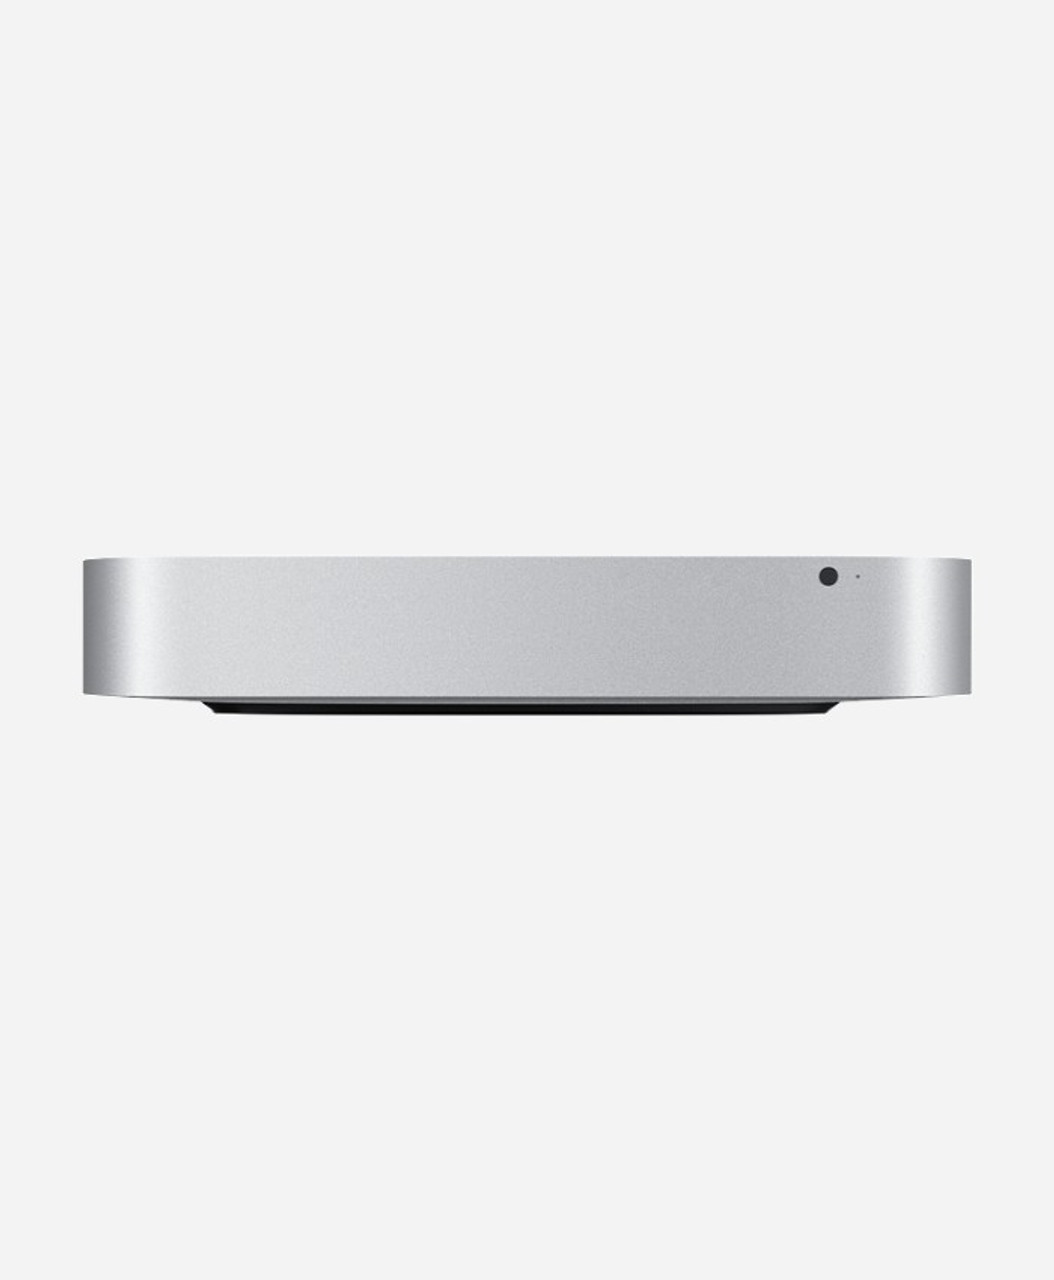 Used Apple Mac Mini Aluminum Unibody 1.4GHZ Dual Core i5 (Late 2014)  MGEM2LL/A - GainSaver